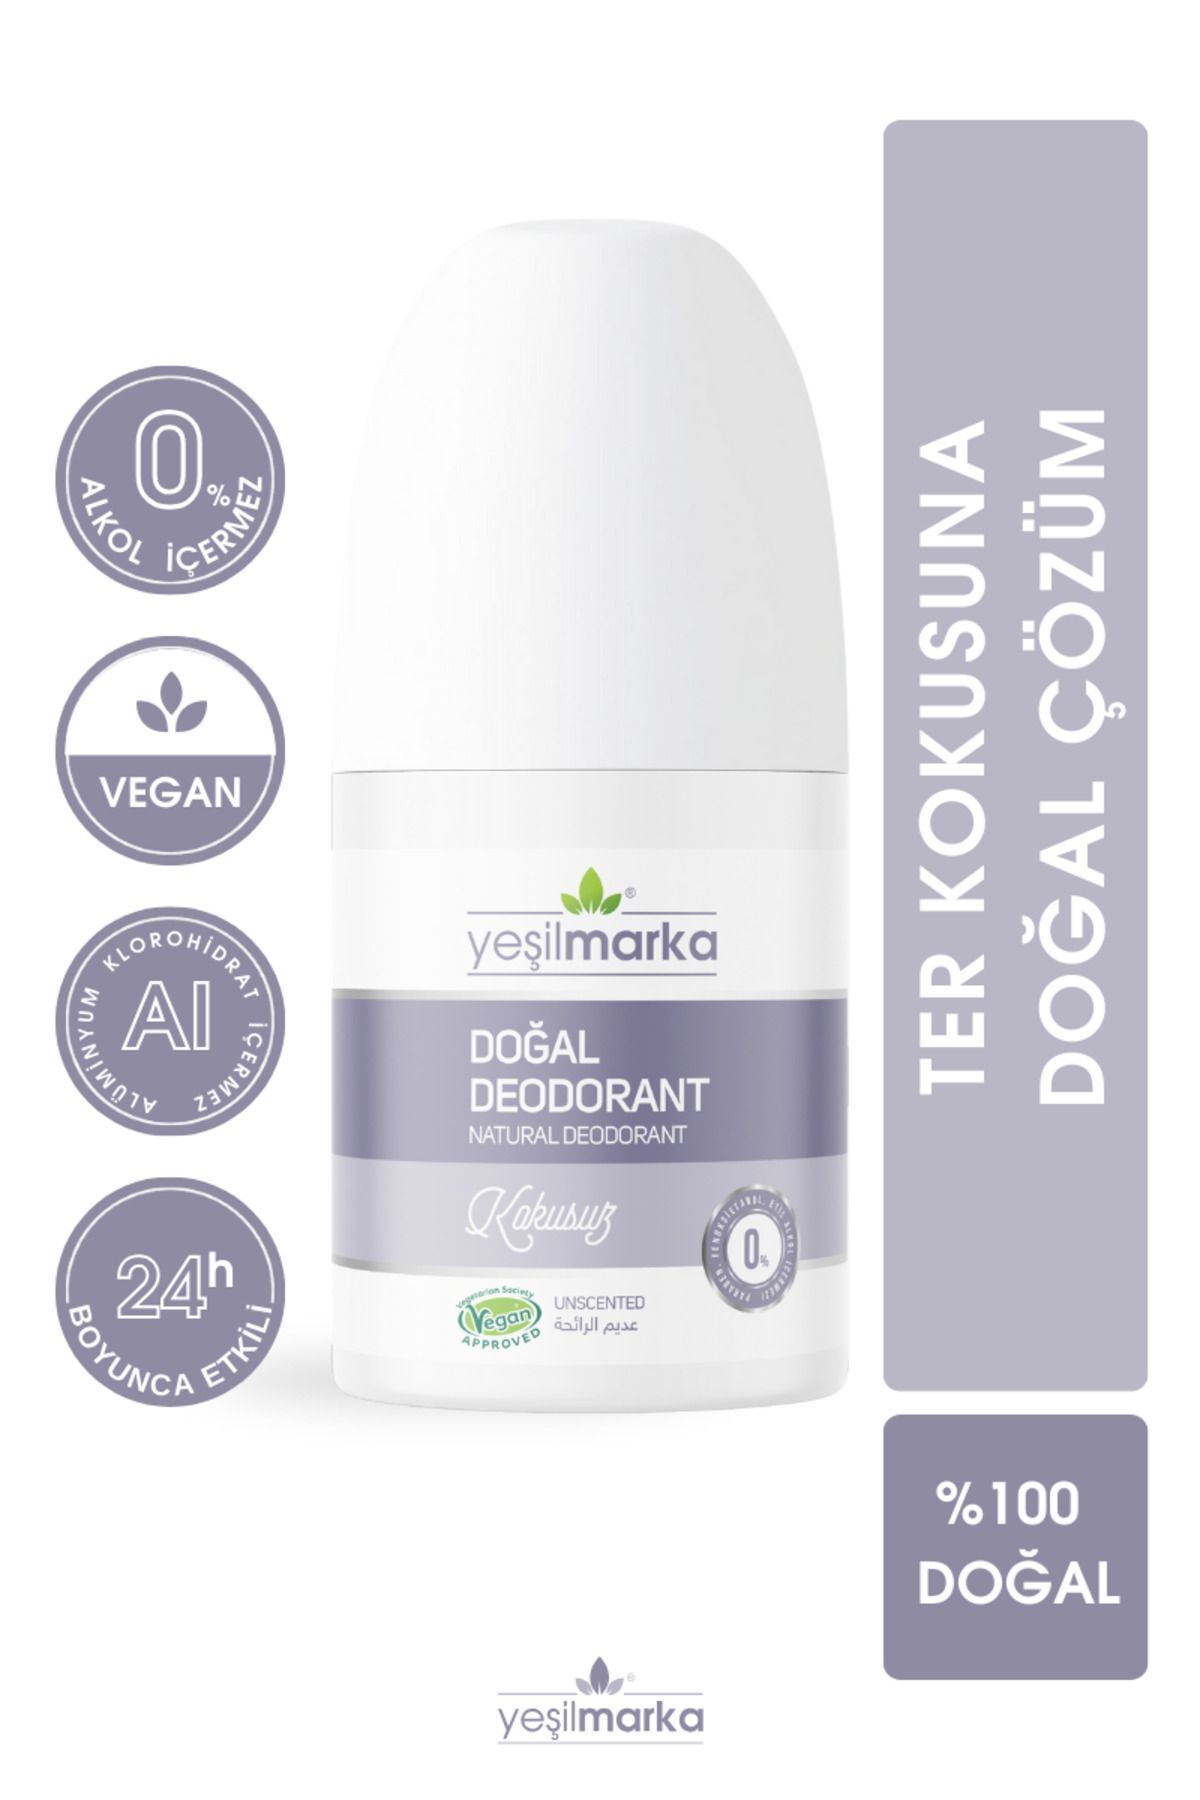 yeşilmarka %100 Doğal Roll On Deodorant- Kokusuz- Vegan- Alkolsüz- Parabensiz- Parfümsüz